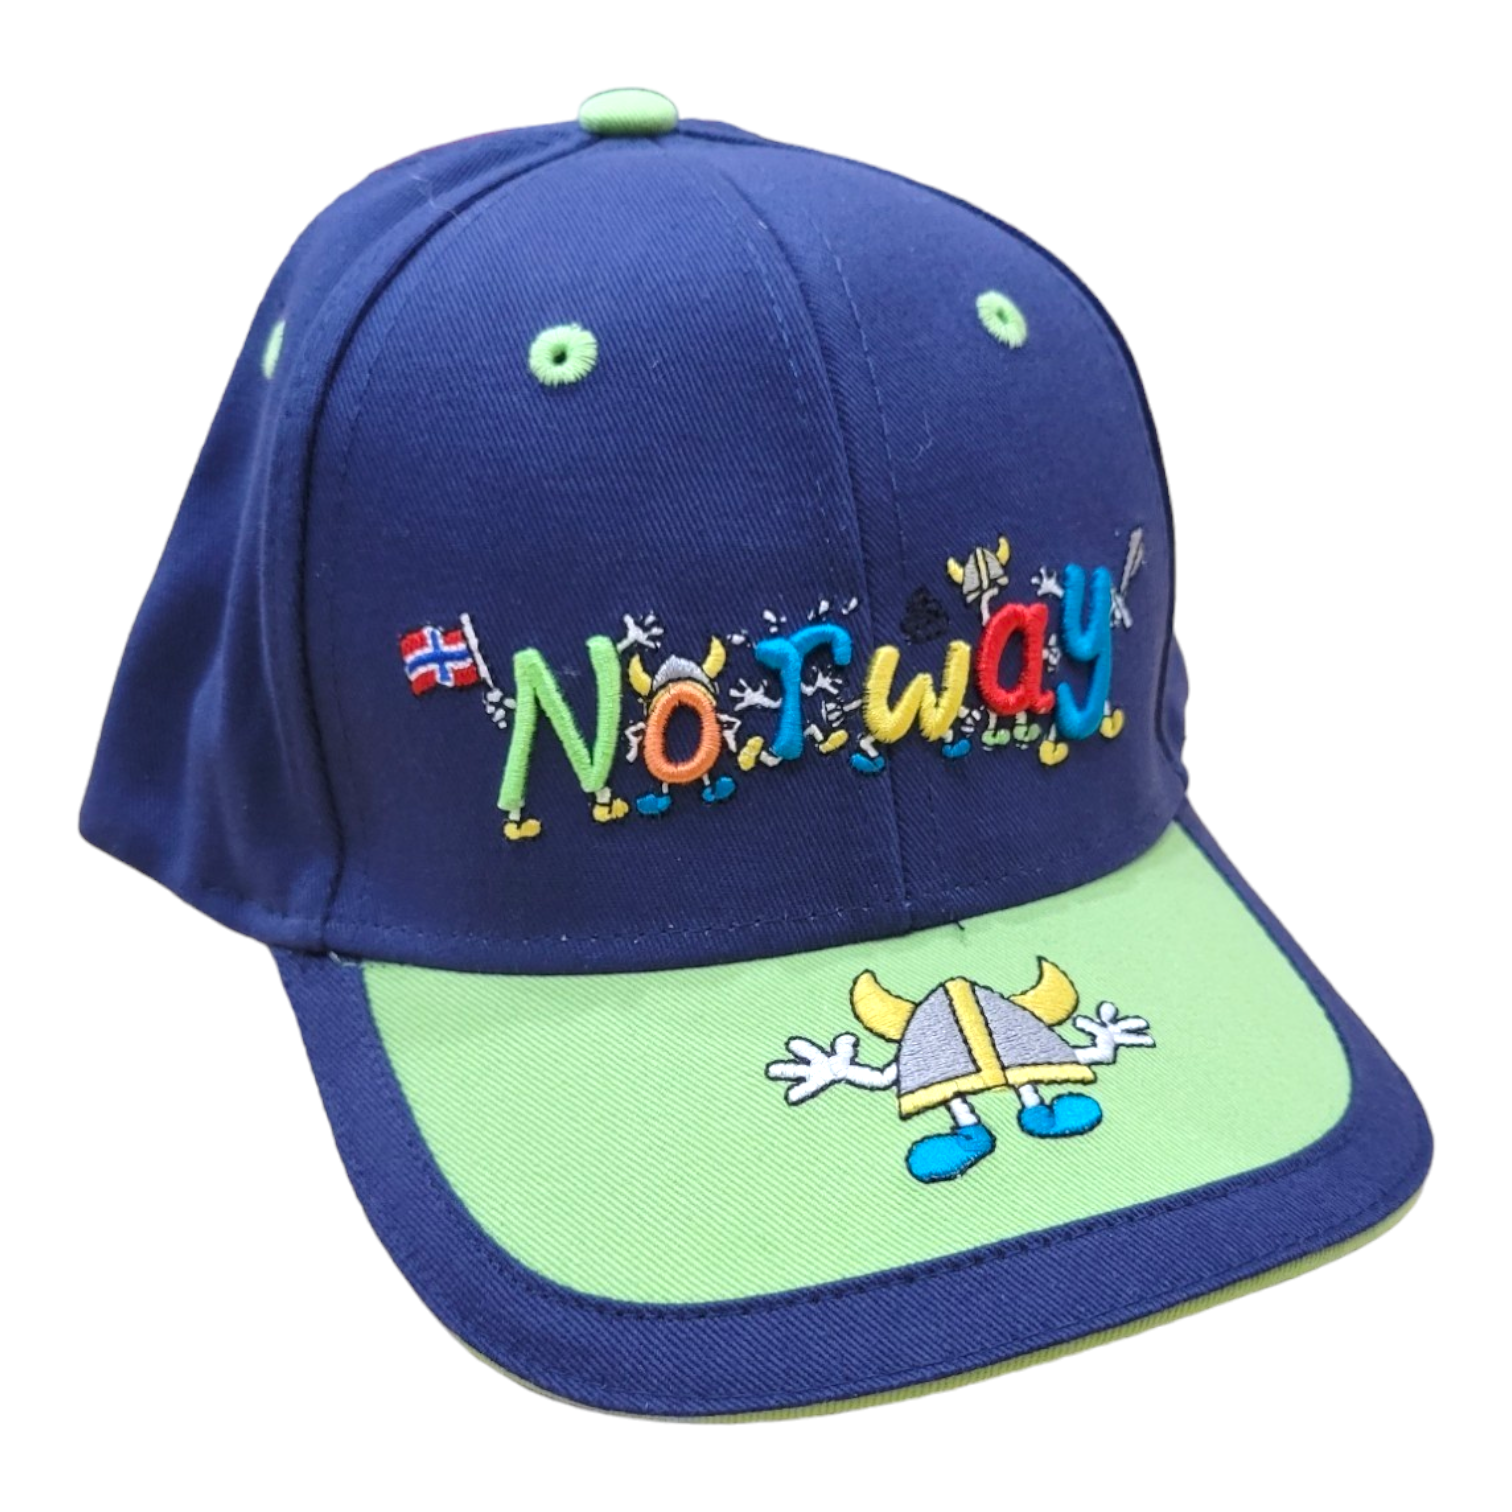 Hat: Baseball Cap Boys or Girls